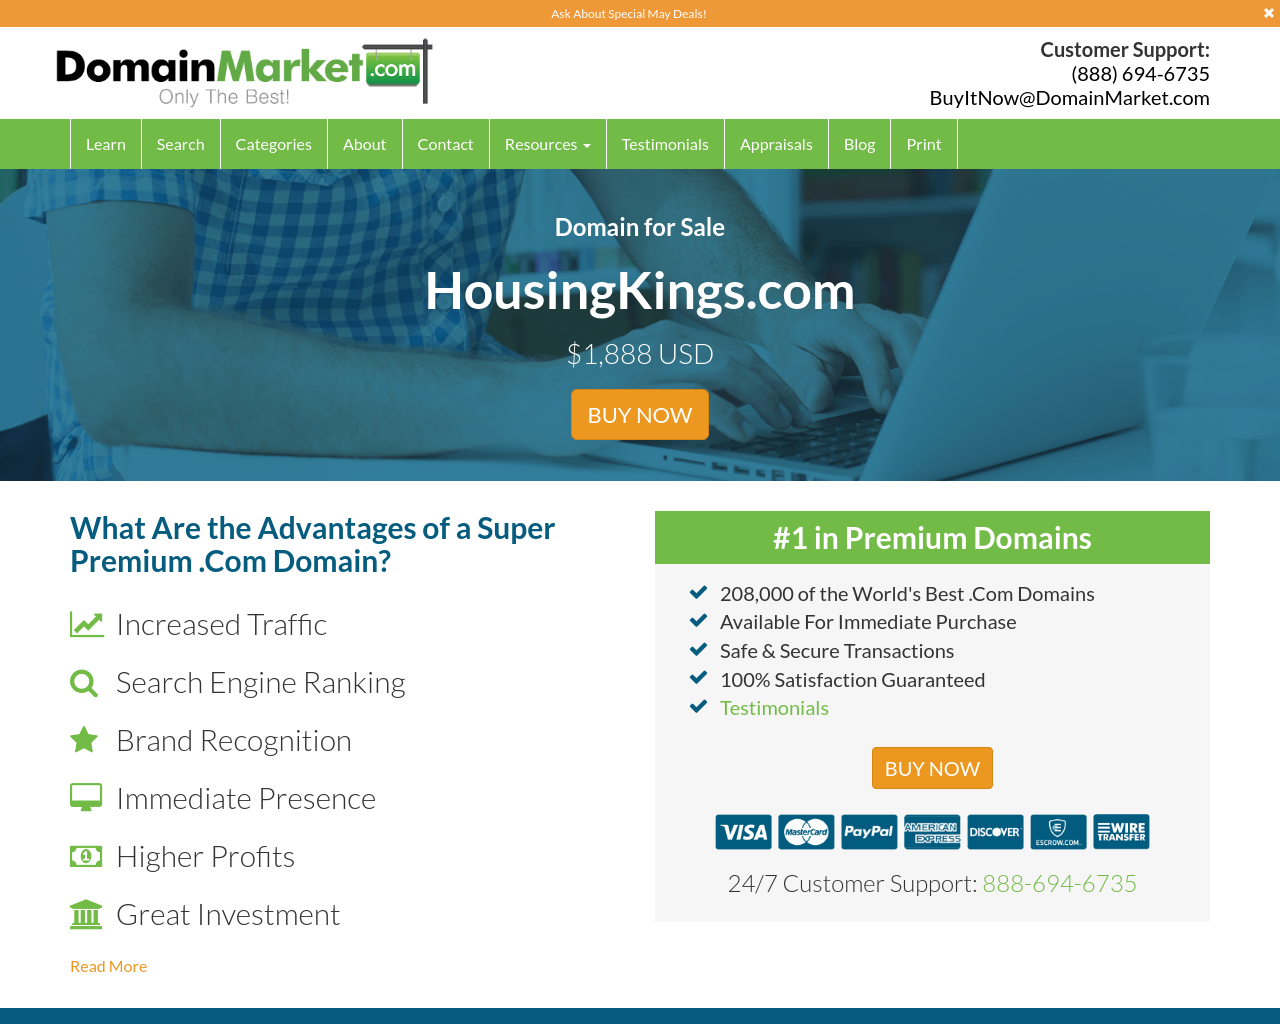 housingkings.com